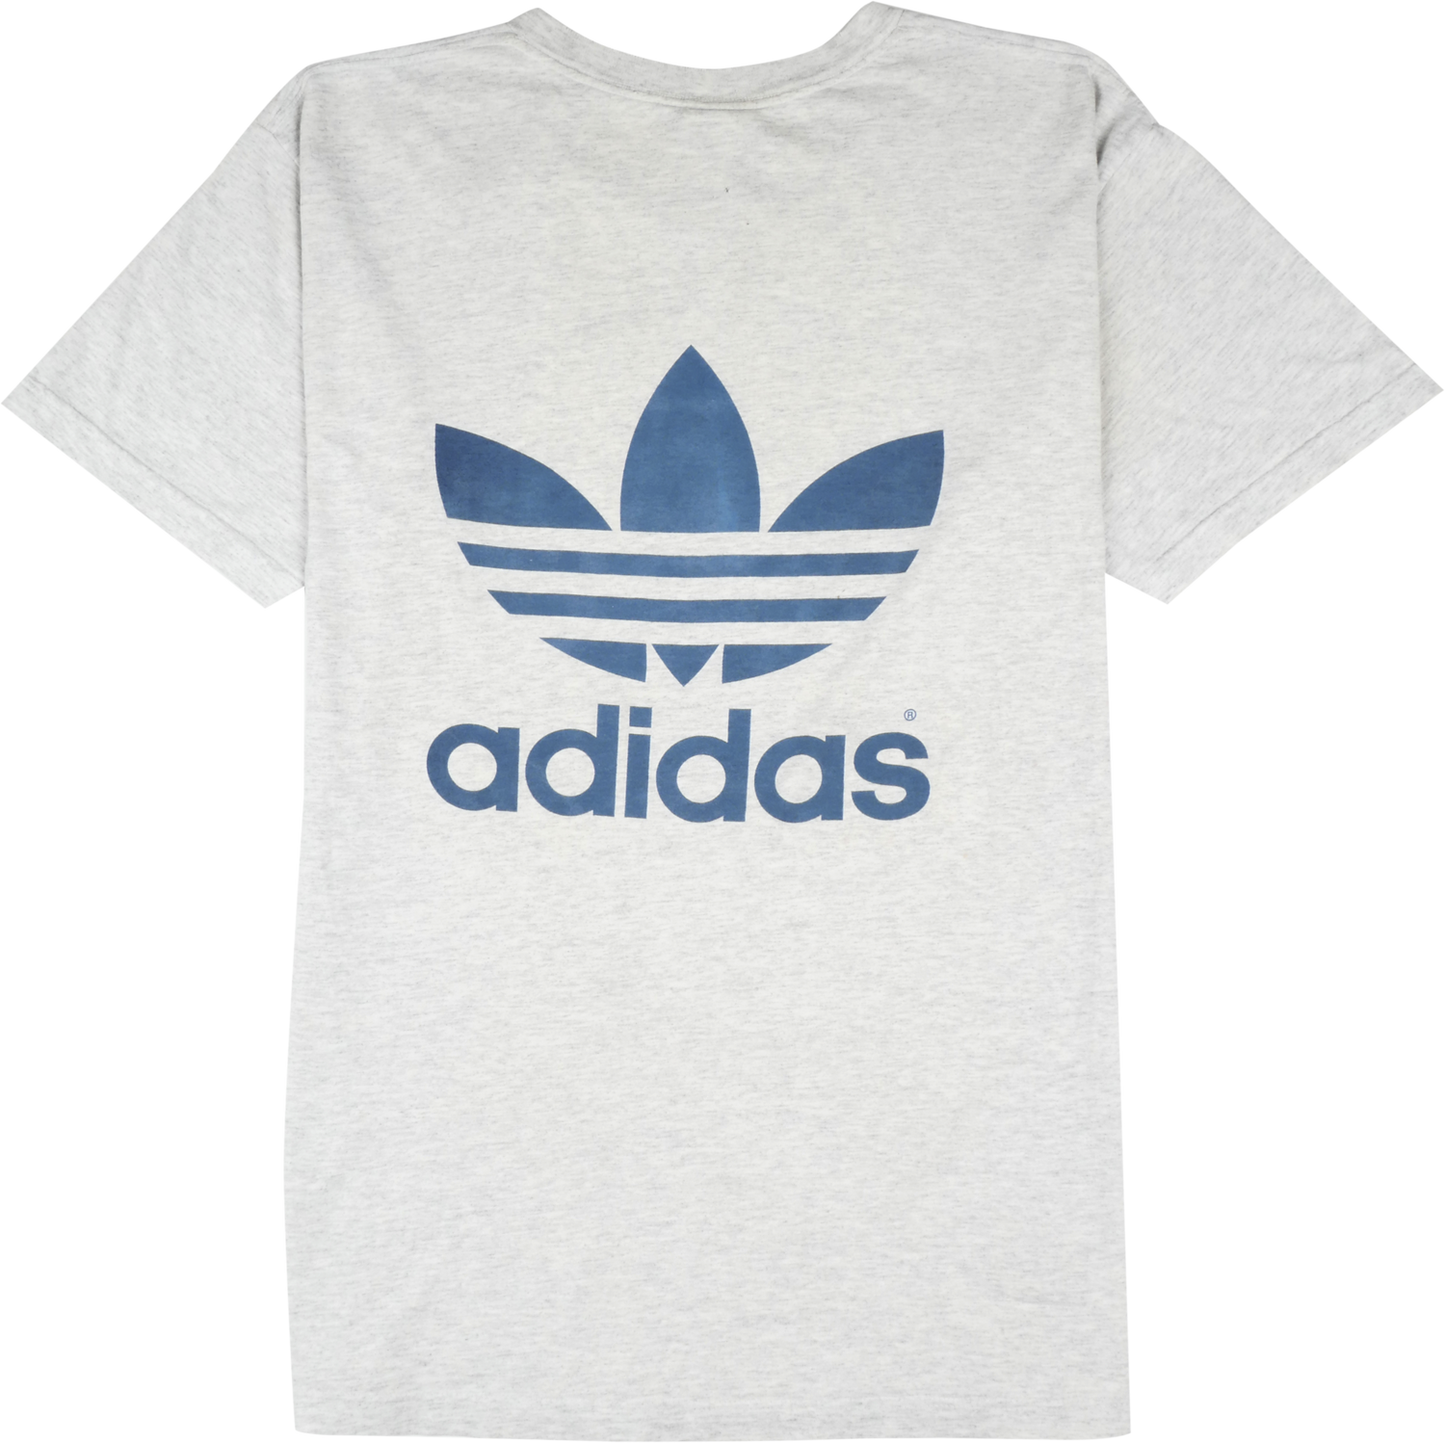 Adidas weiß T-Shirt